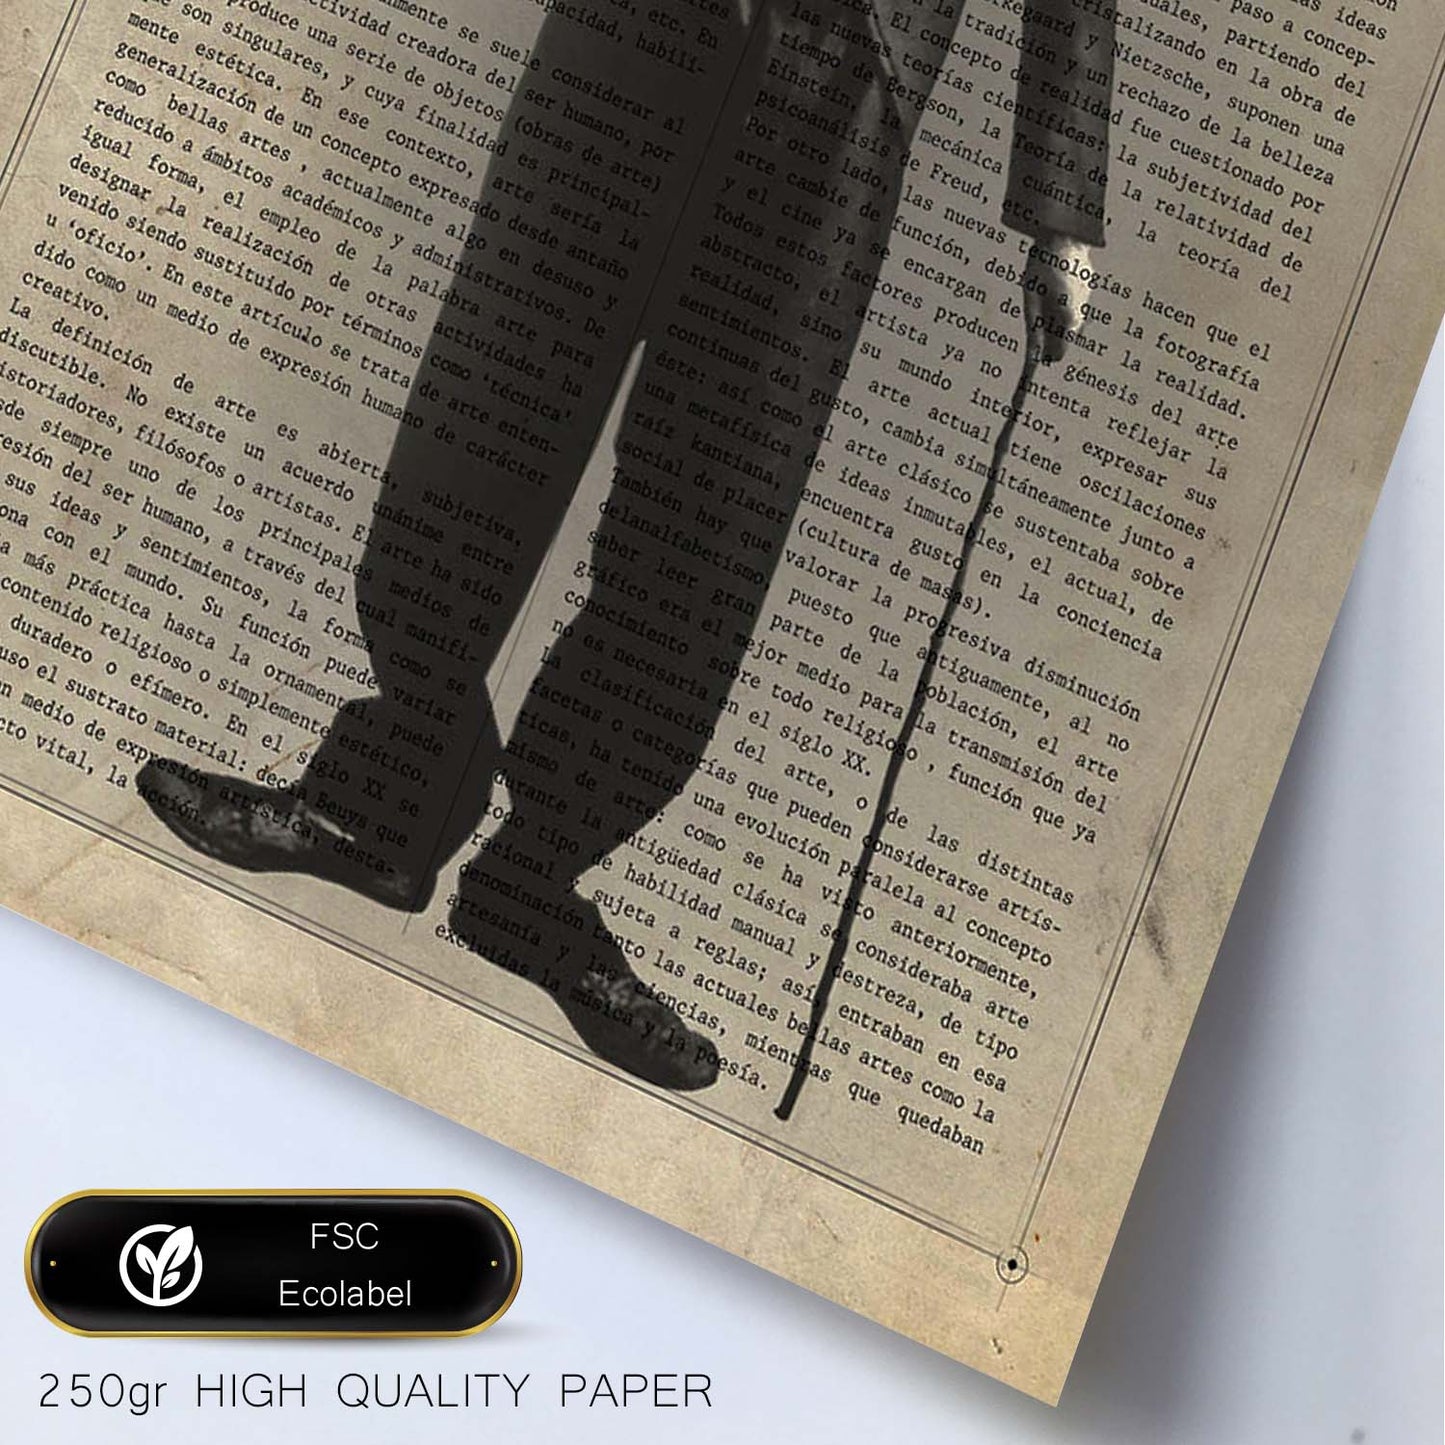 Poster de Charles Chaplin. Láminas de personajes importantes. Posters de músicos, actores, inventores, exploradores, ...-Artwork-Nacnic-Nacnic Estudio SL